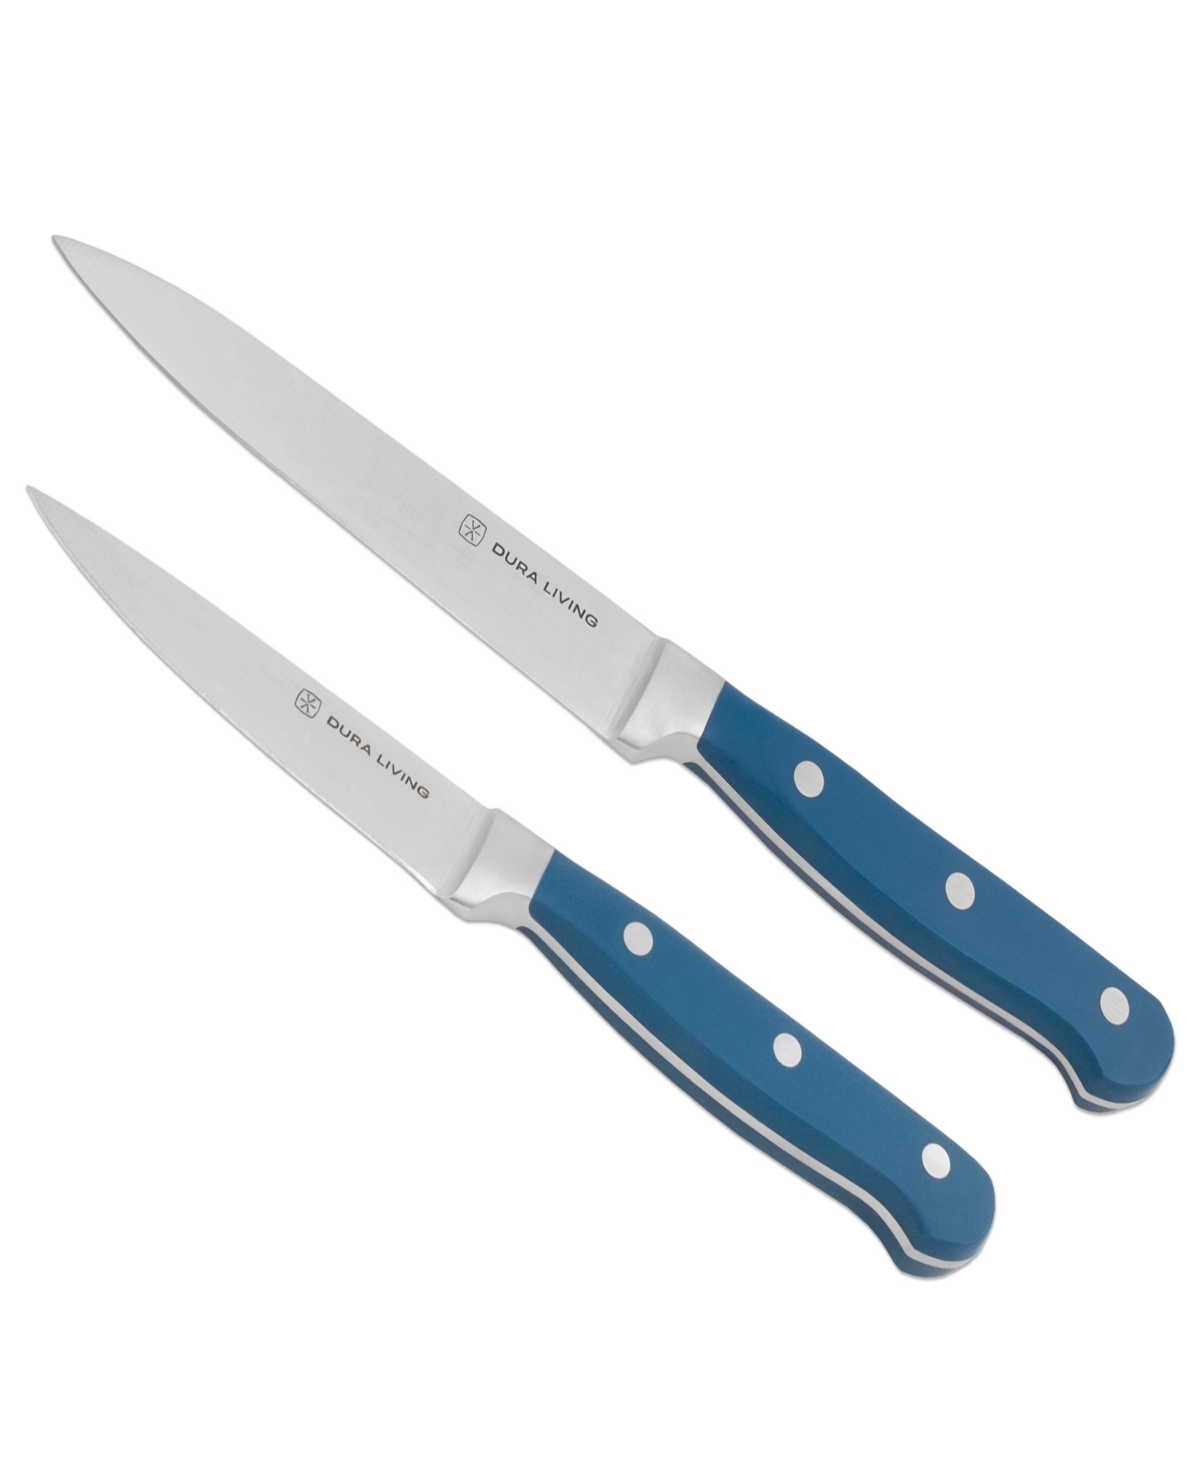 Duraliving 2-piece Knife Set In Royal Blue